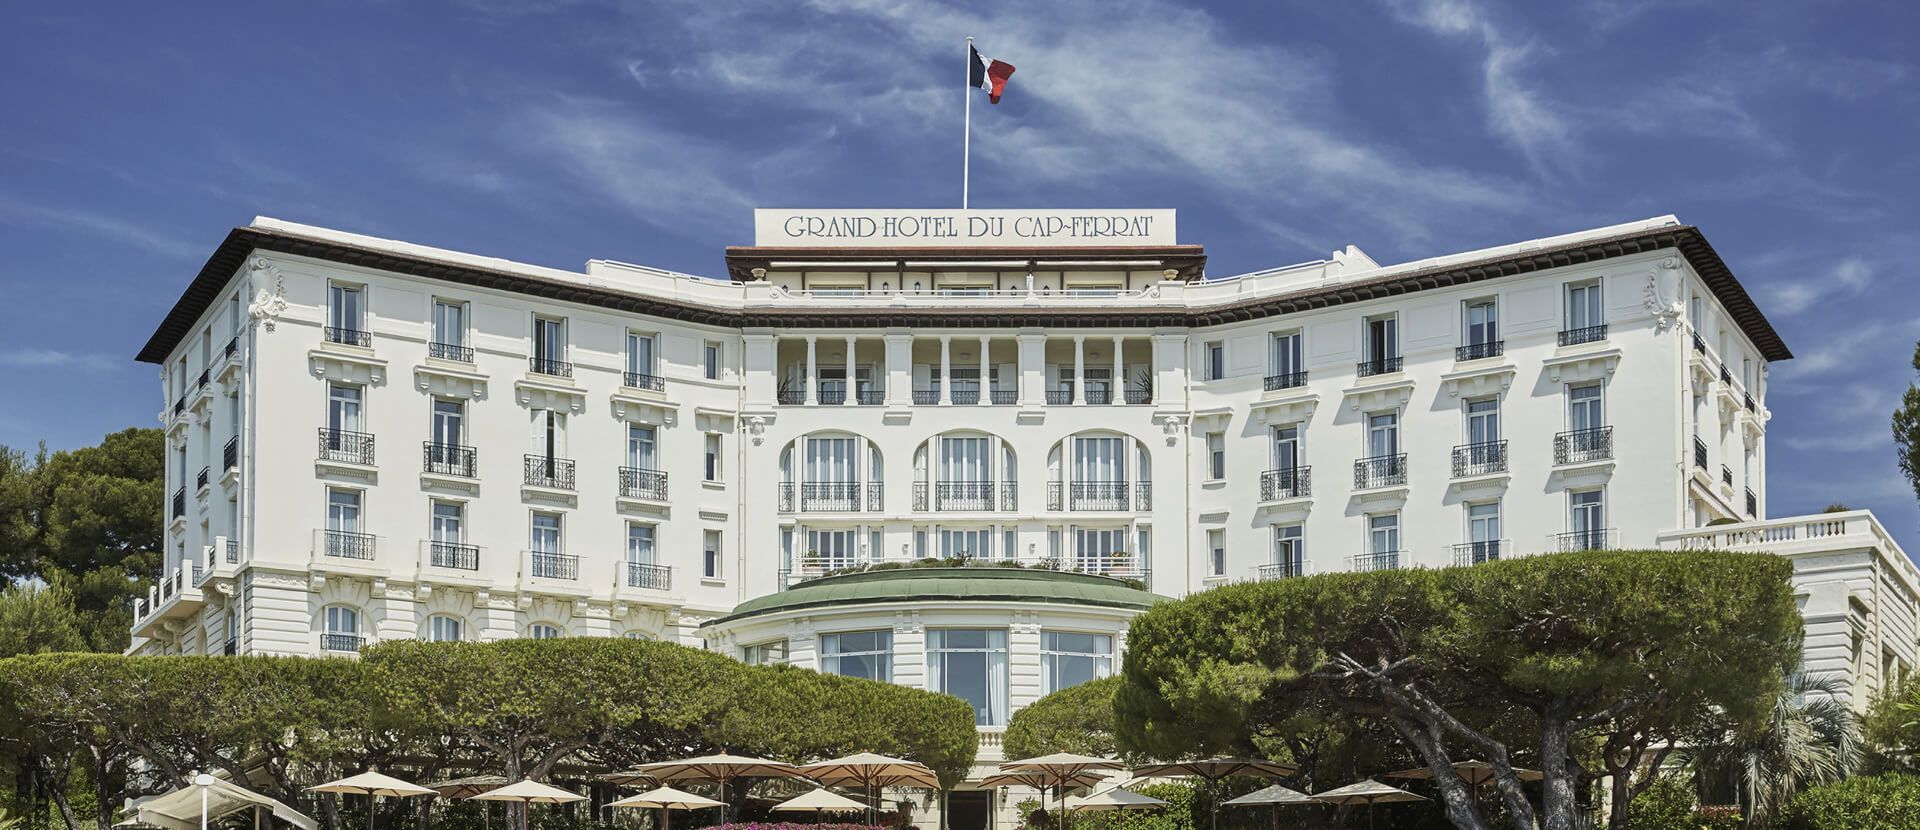 Grand-Hotel du Cap-Ferrat, a Four Seasons Hotel 